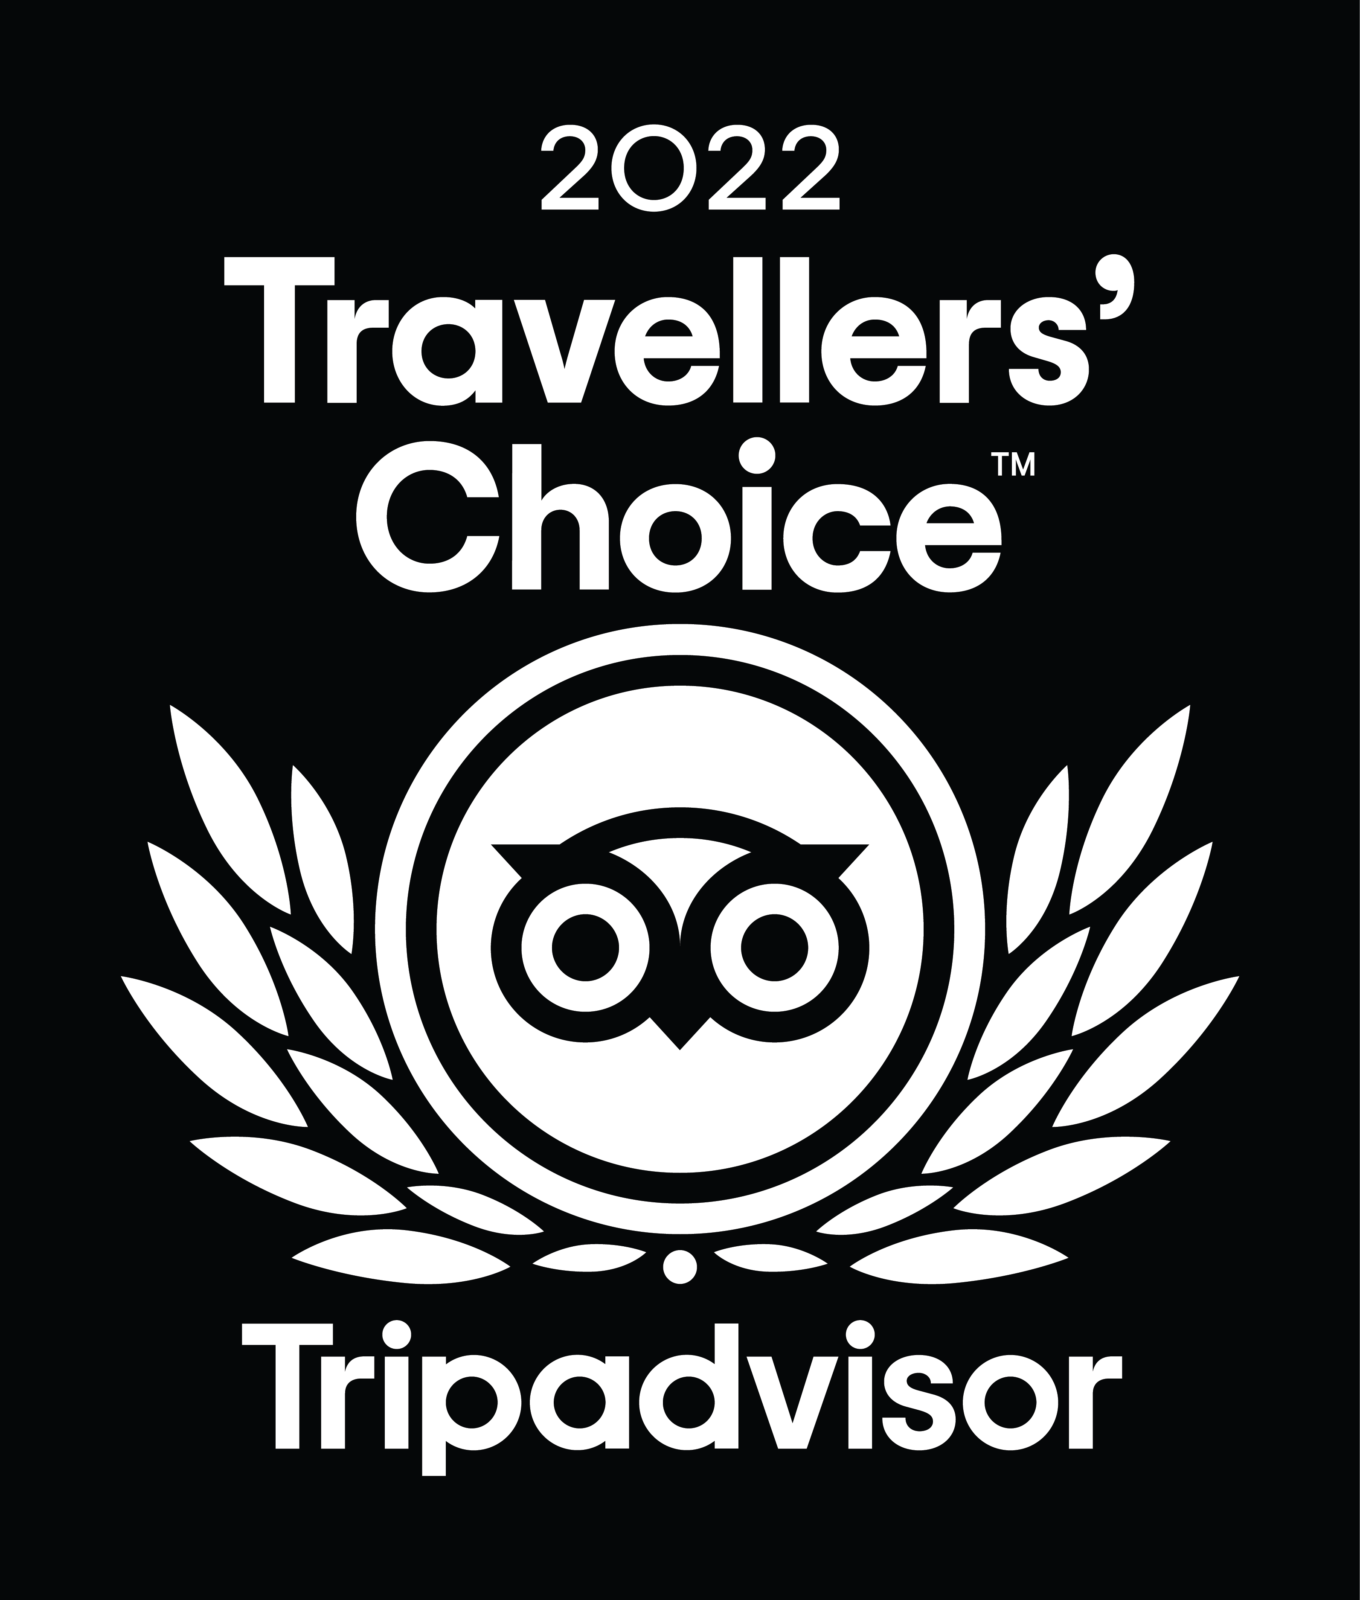 Tripadvisor 2022 Traveler Choice Certificate